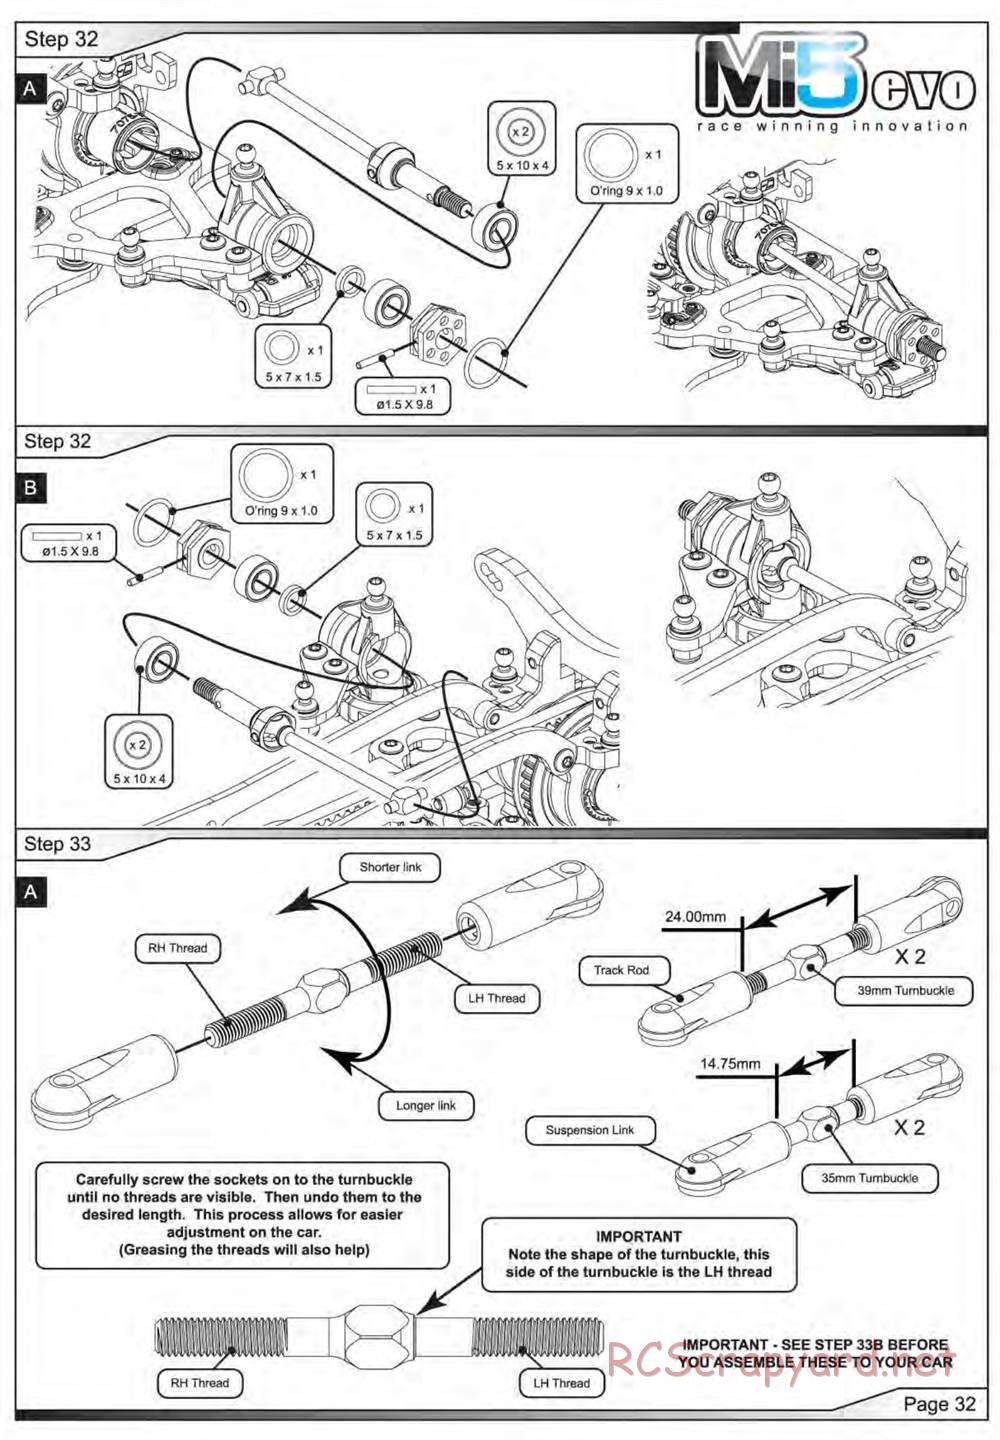 Schumacher - Mi5 Evo - Manual - Page 33